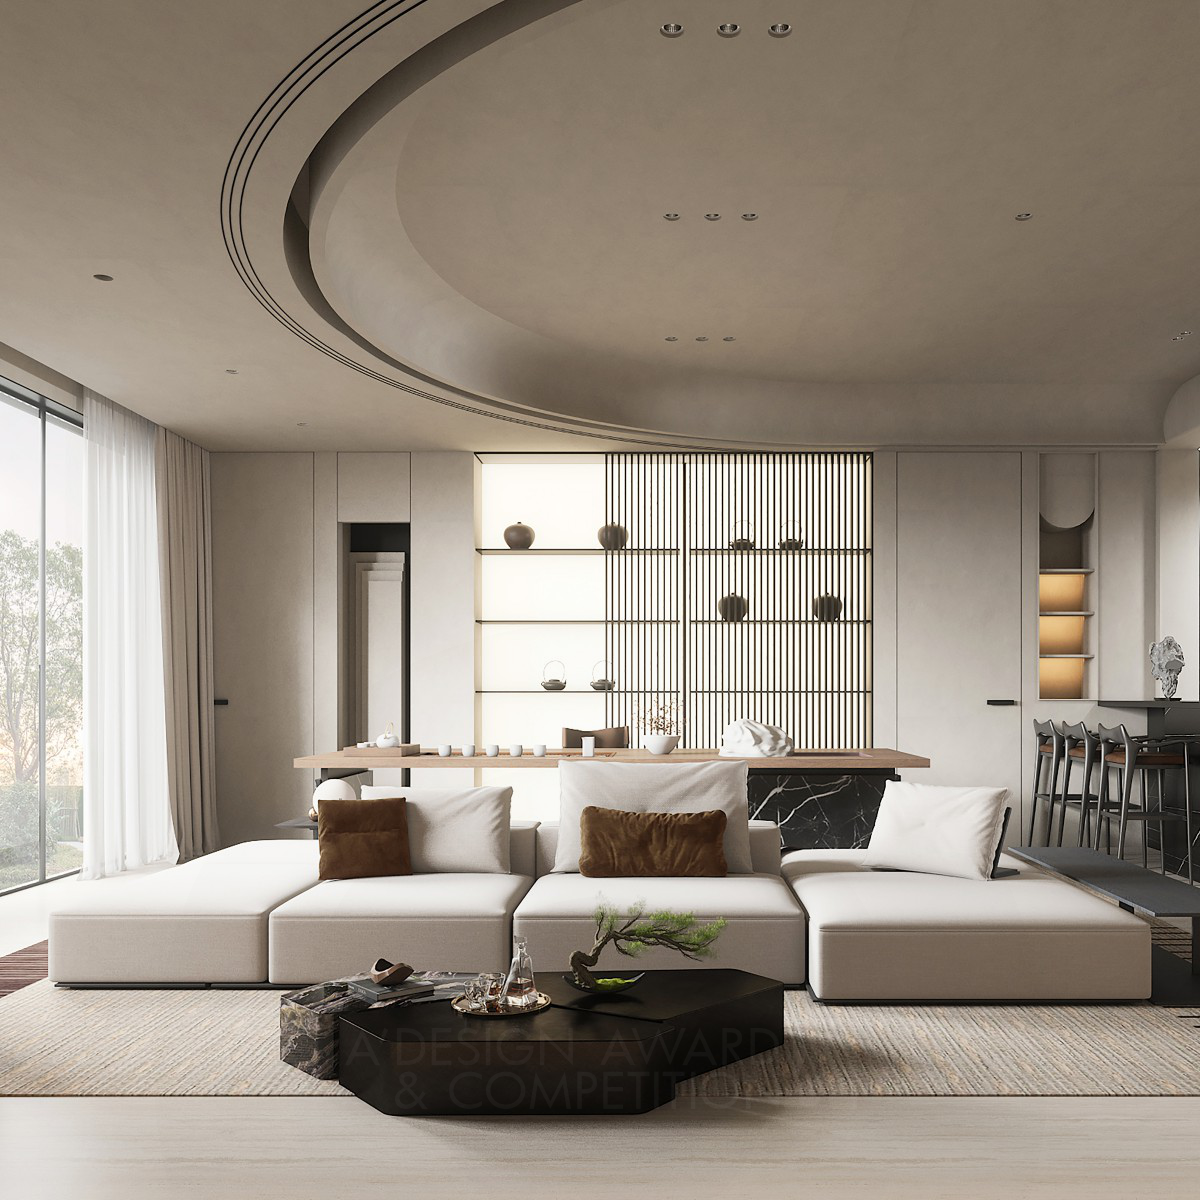 Shenzhen Plus Architectural Design Co., Ltd wins Silver at the prestigious A' Interior Space, Retail and Exhibition Design Award with Guangzhou Serene Villa.